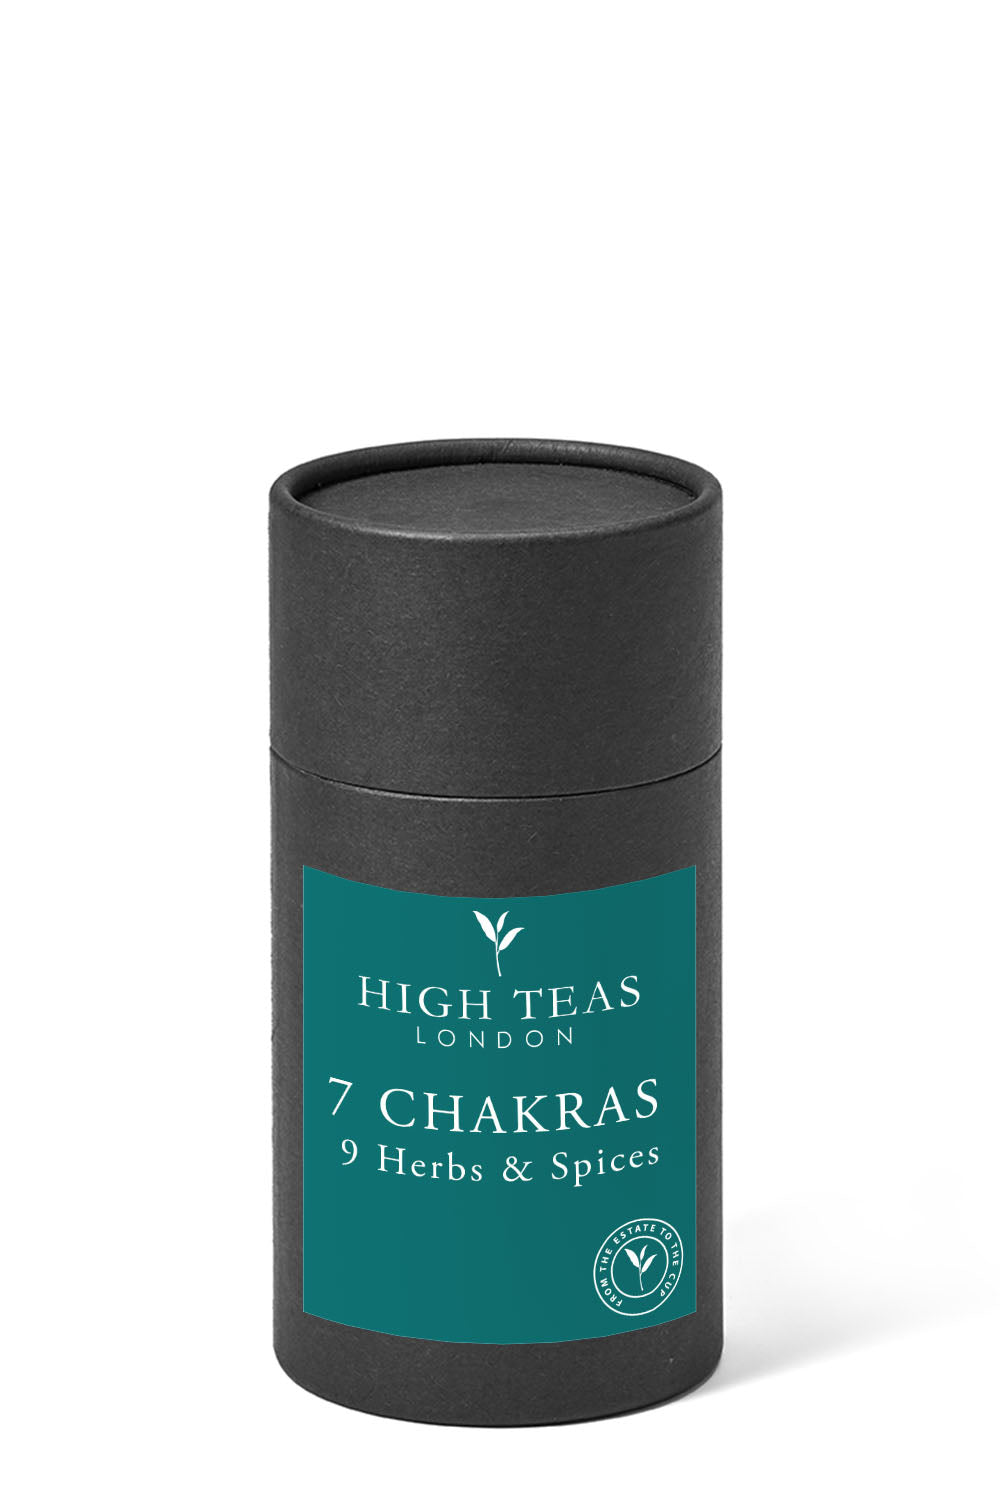 7 Chakras-60g gift-Loose Leaf Tea-High Teas